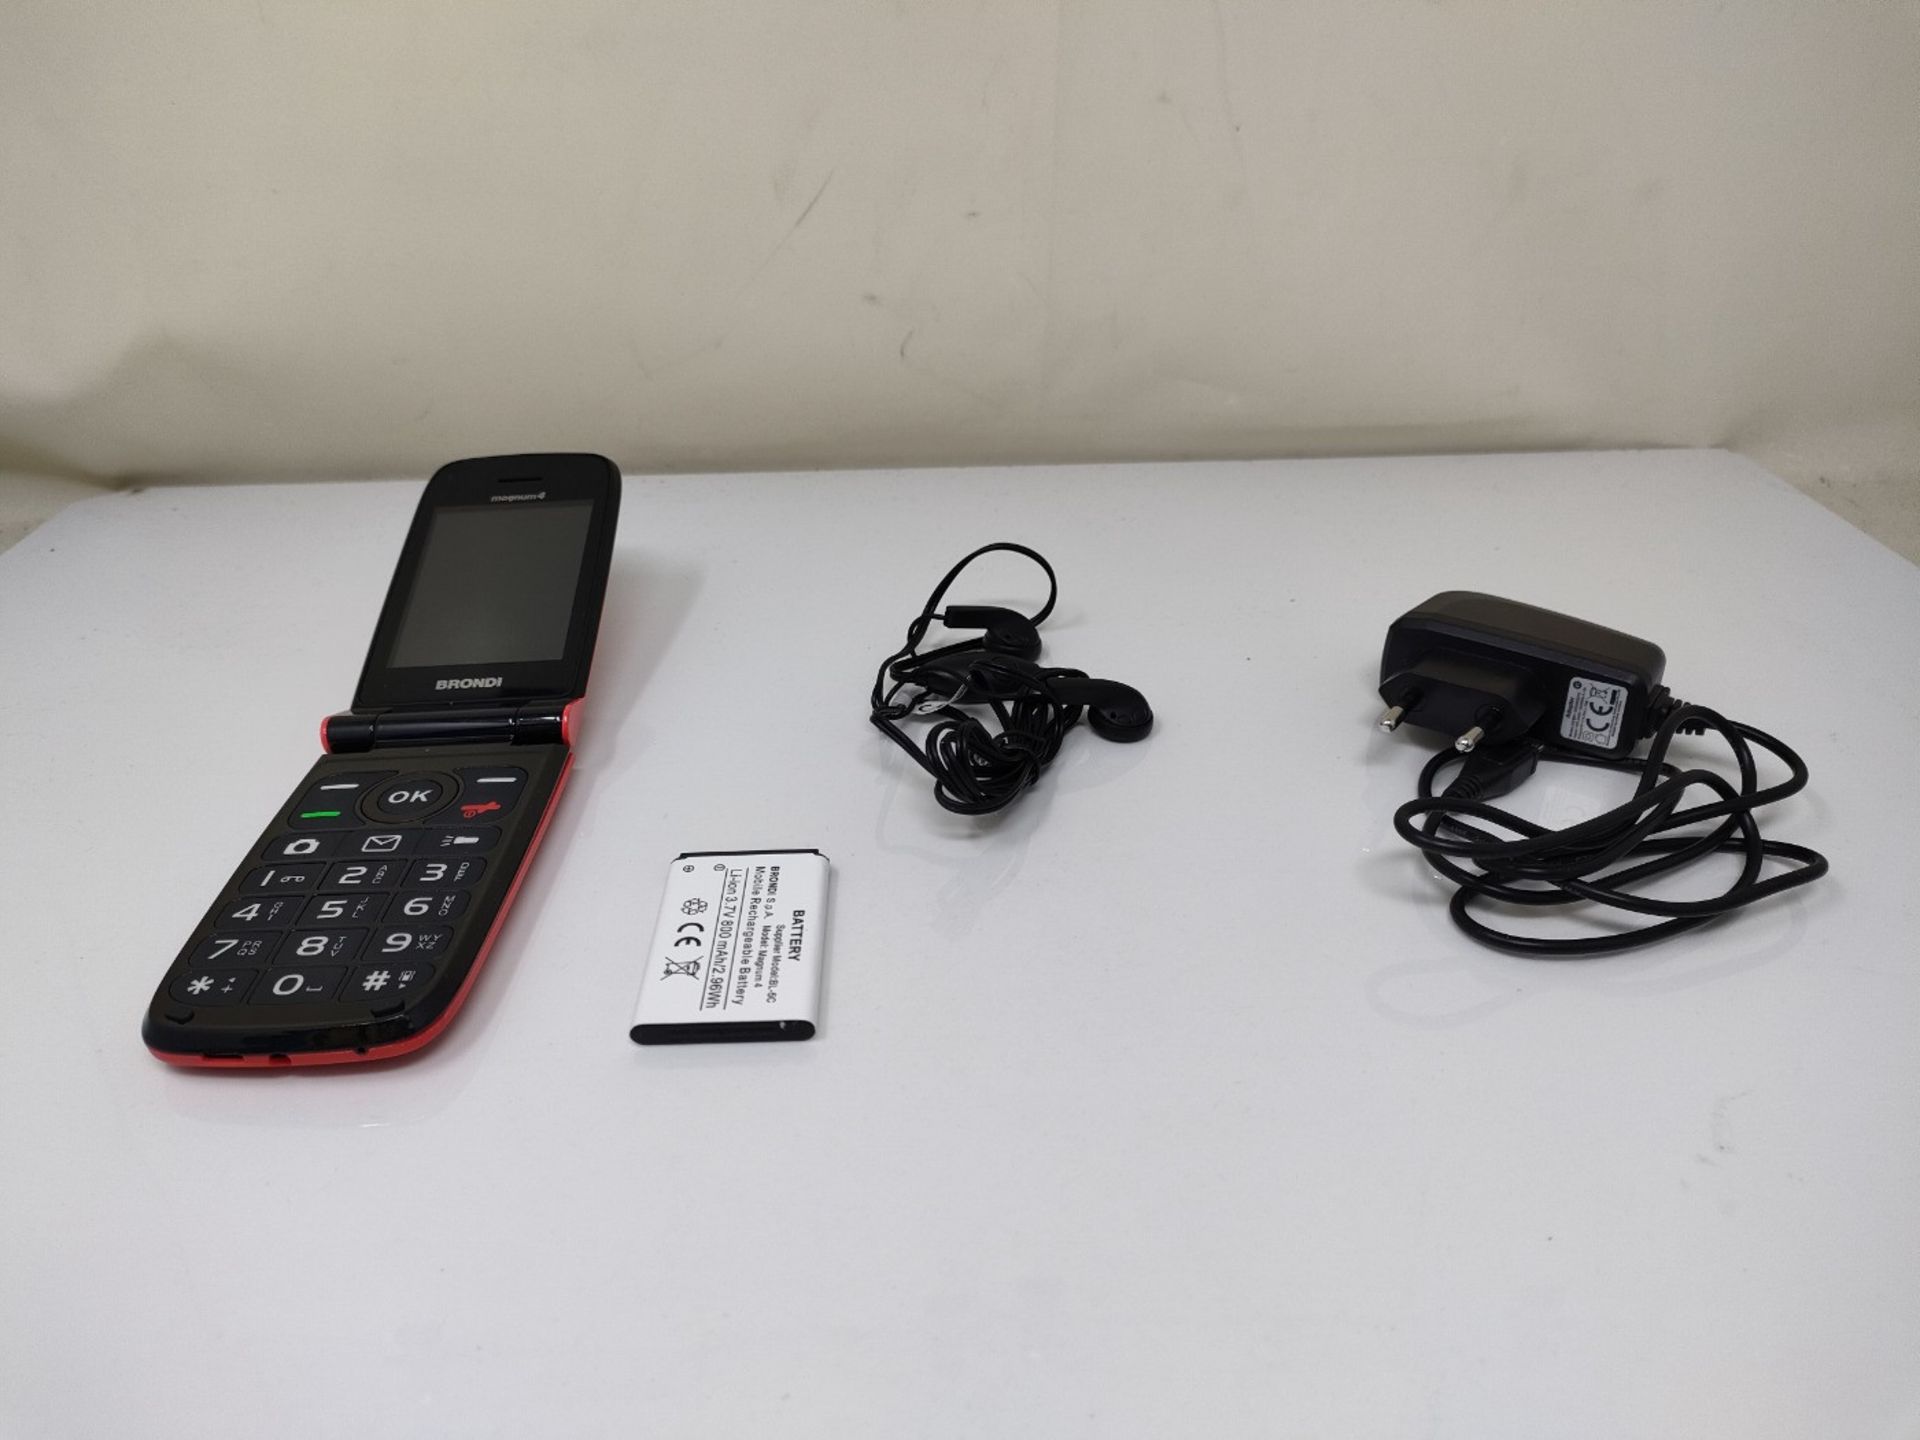 Brondi Magnum 4 Maxi Display Mobile Phone, Backlit Physical Keyboard, Dual Sim, 1.3 MP - Image 3 of 3